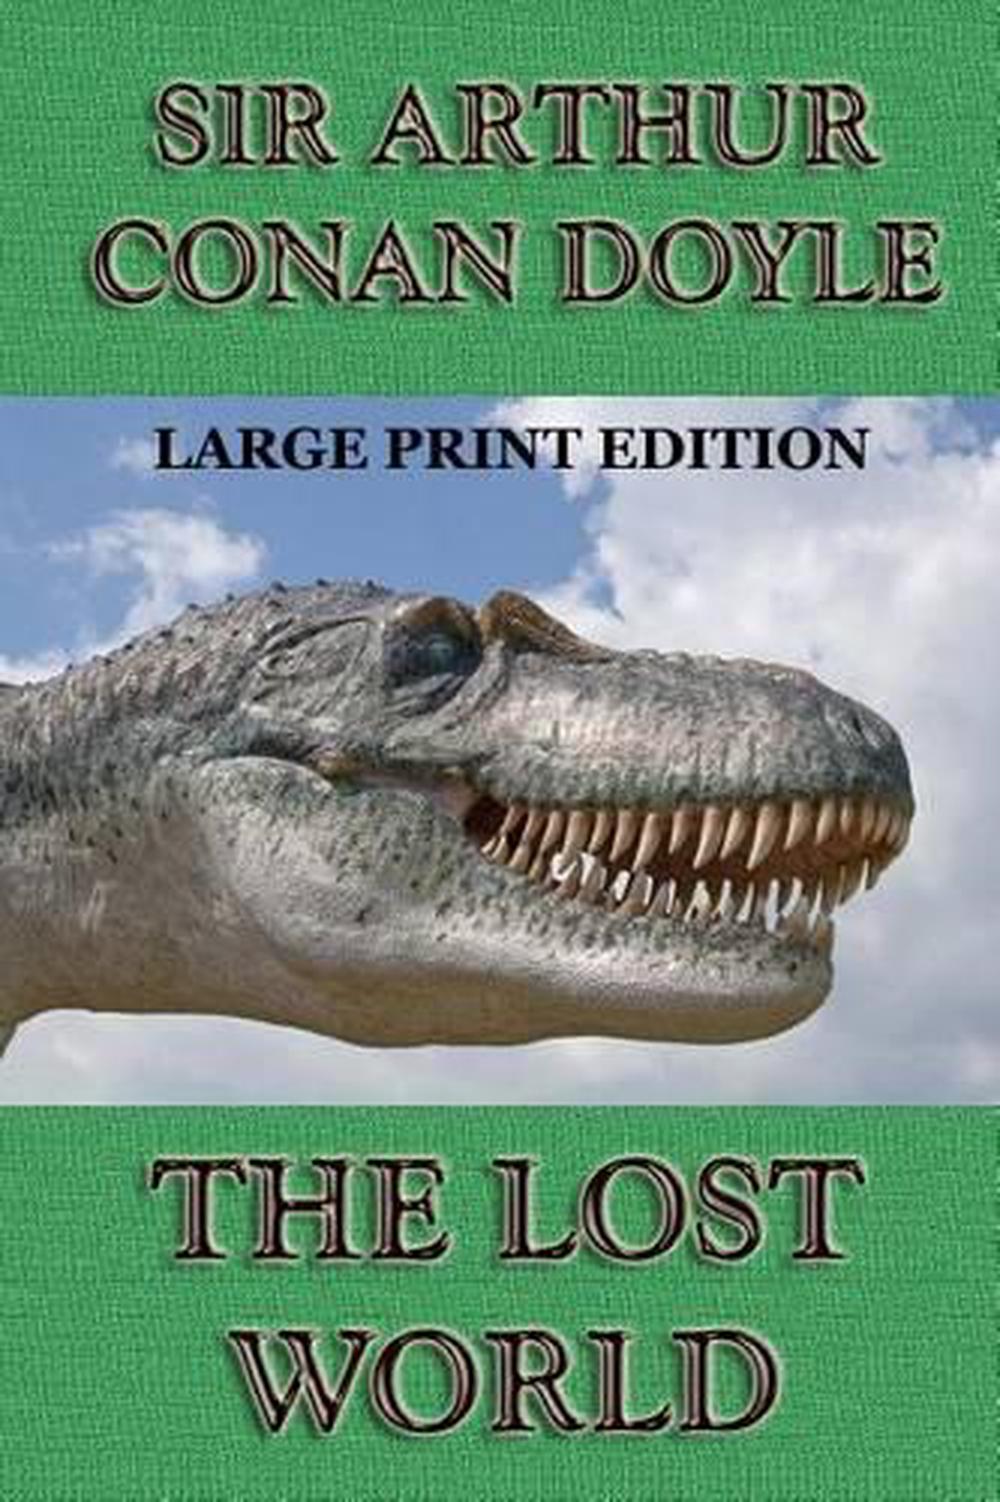 the lost world conan doyle novel